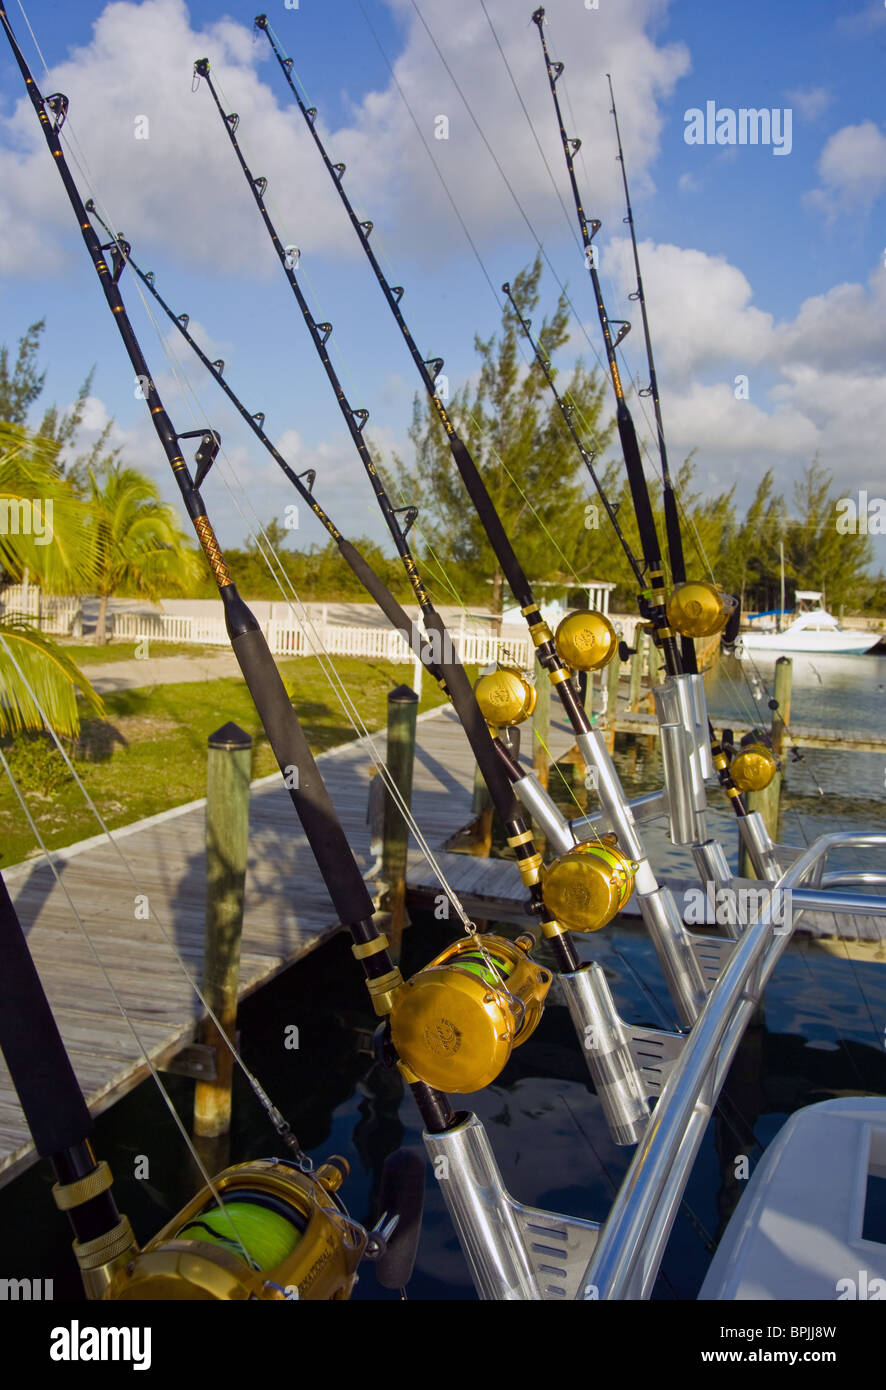 fishing equipment on boat at dock Stock Photo